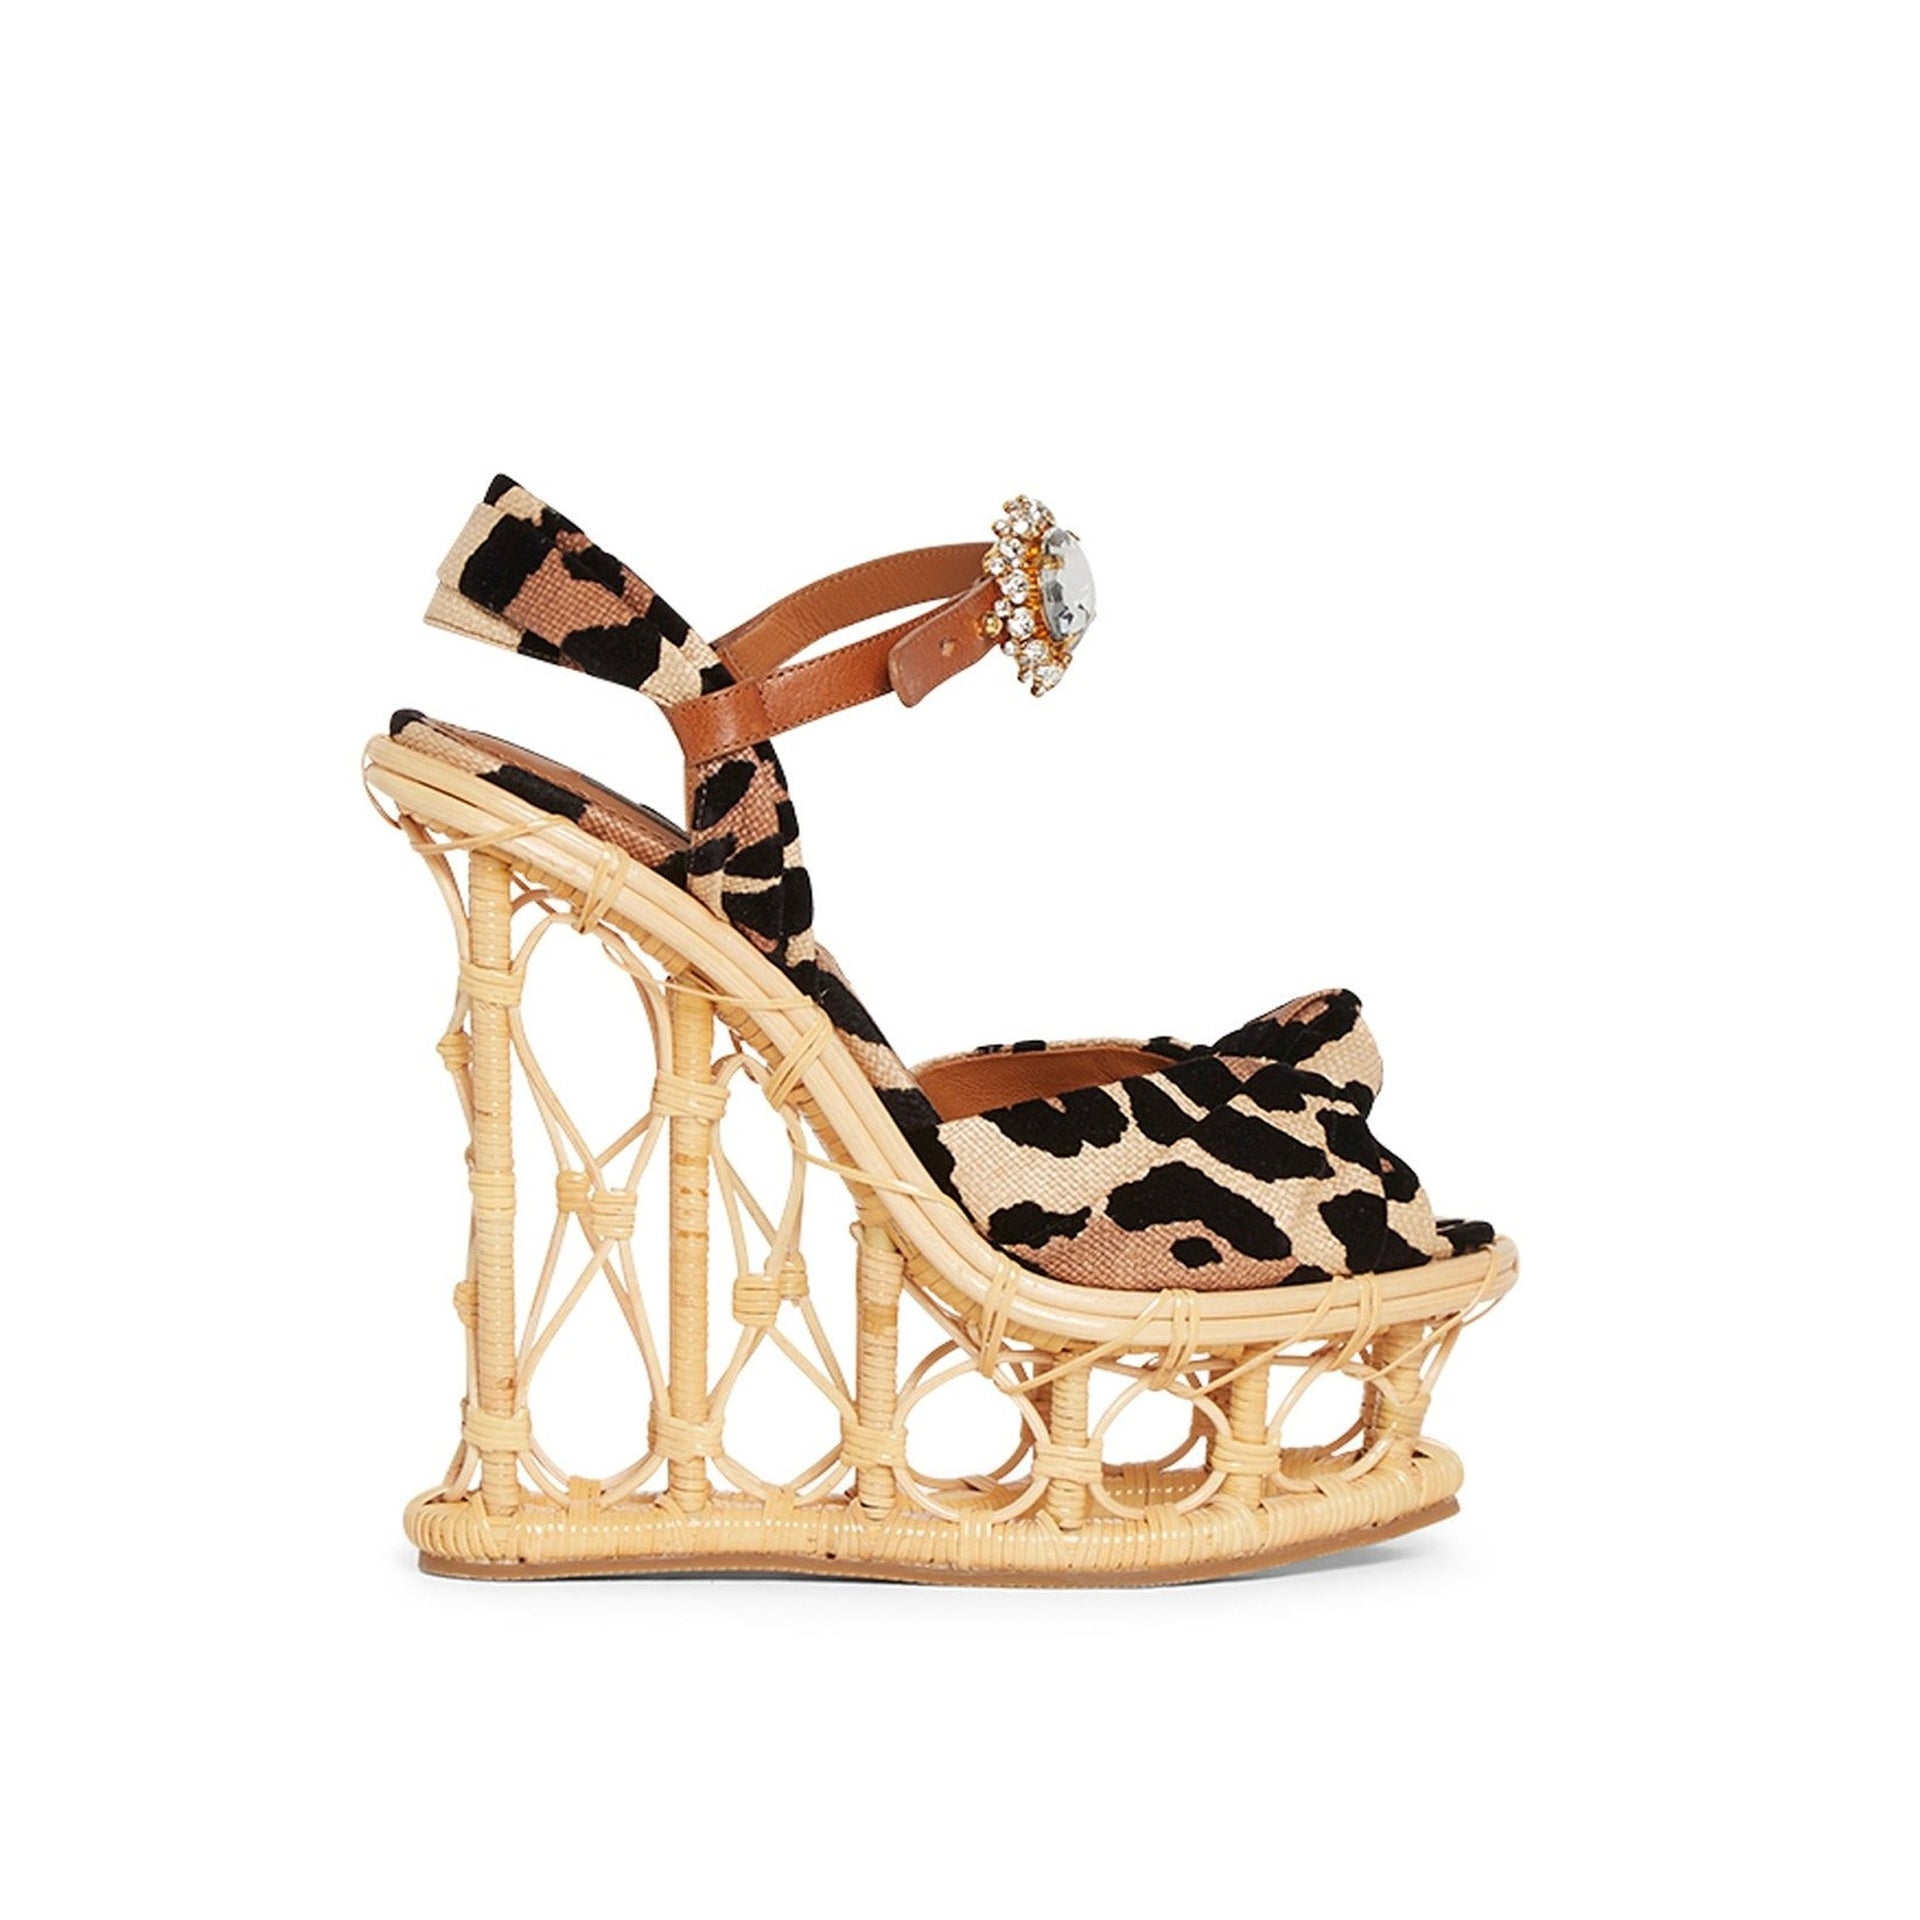 DOLCE-GABBANA-OUTLET-SALE-Dolce-Gabbana-Wedge-Sandals-Sandalen-BEIGE-39-ARCHIVE-COLLECTION.jpg